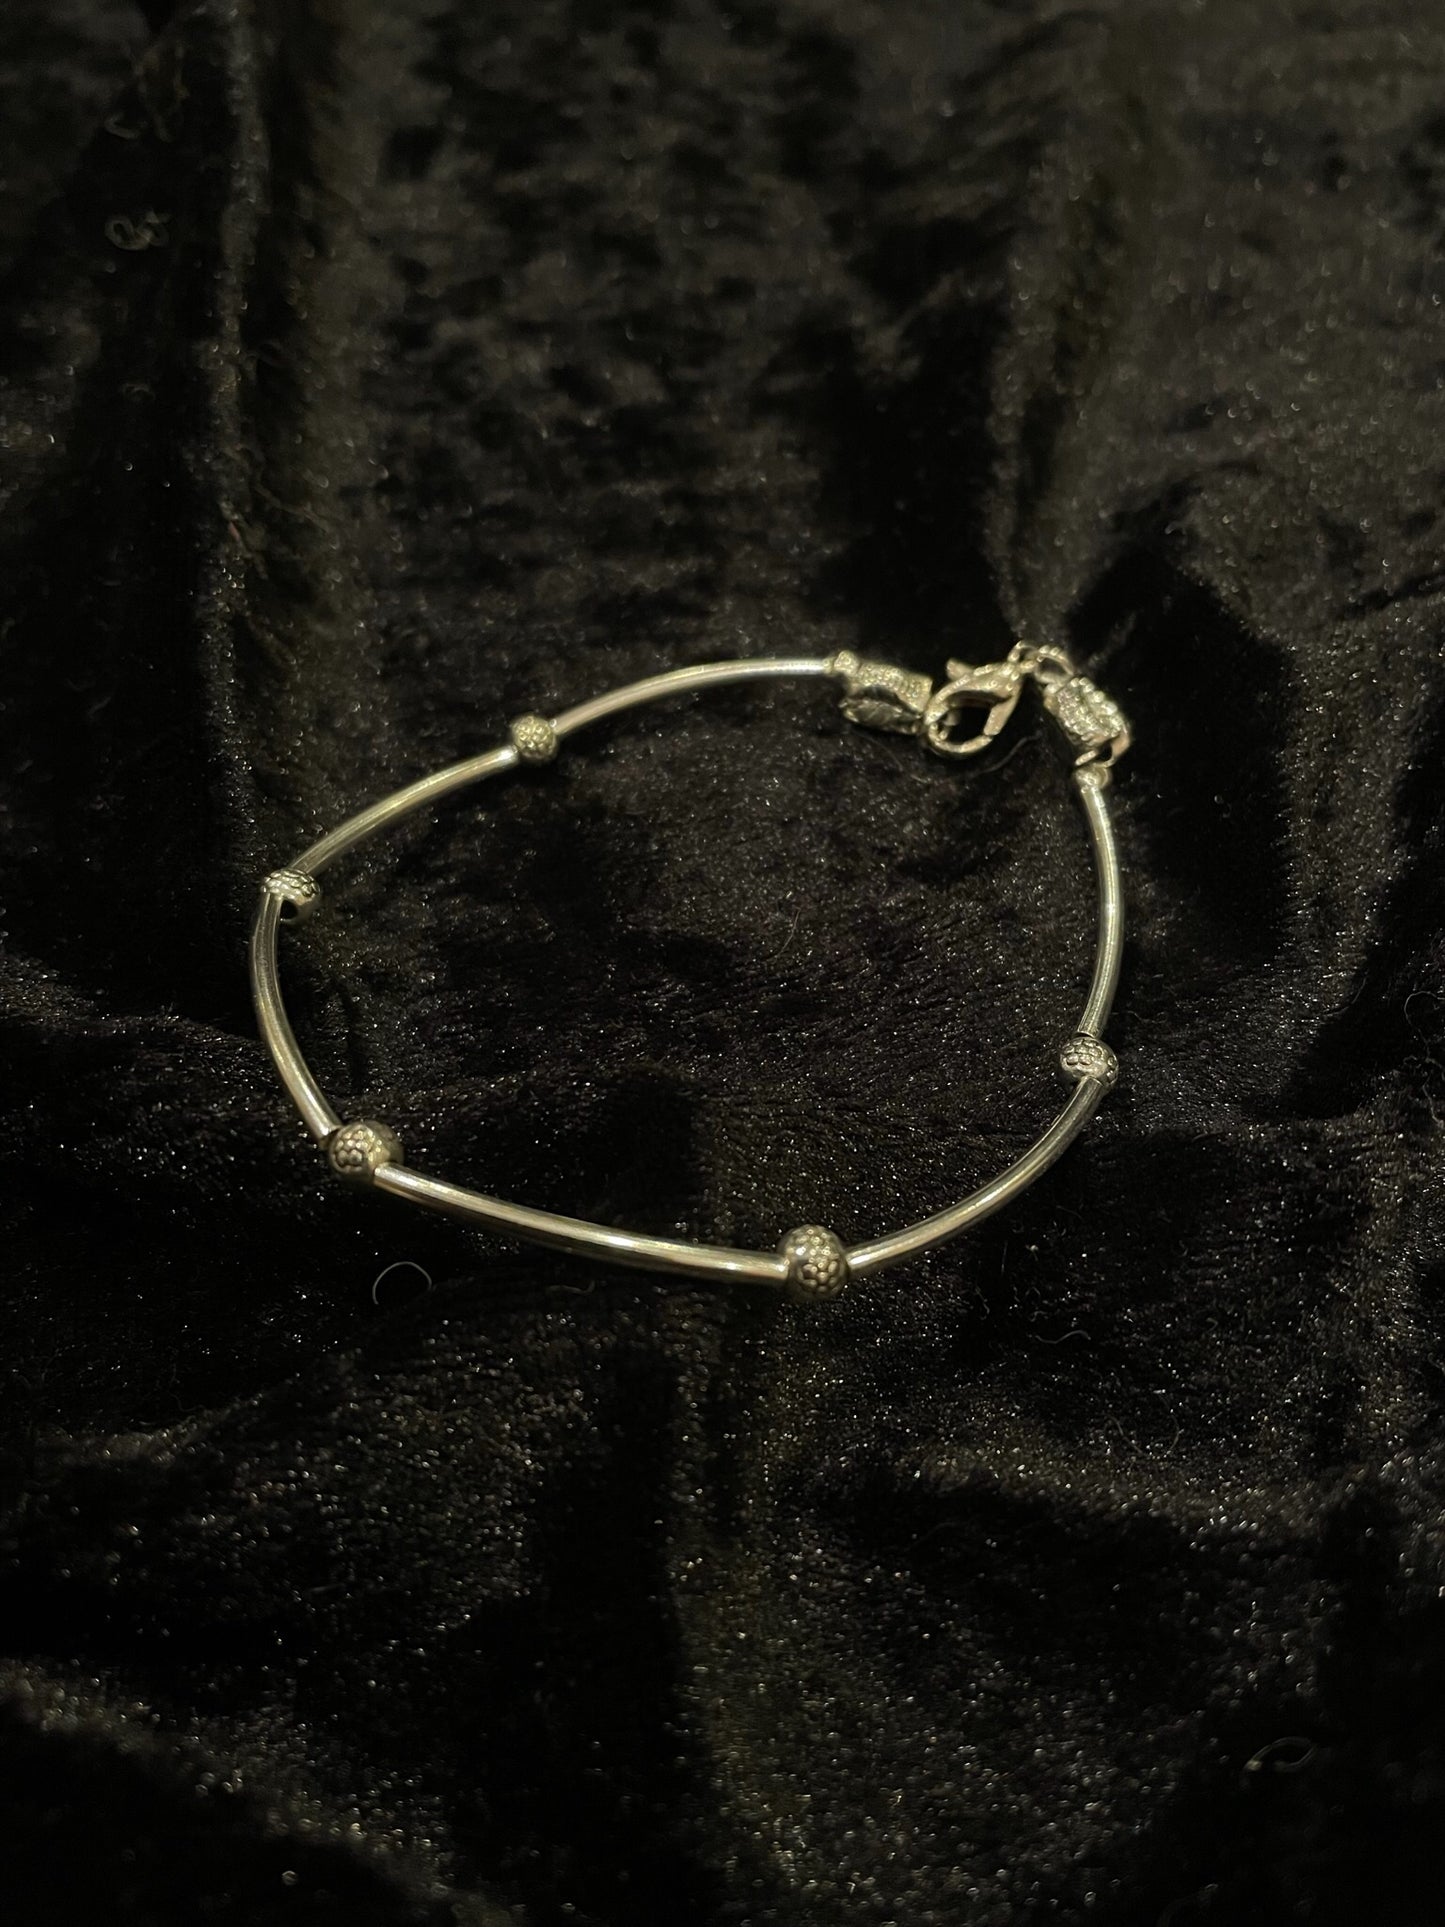 Wire & bead bracelet